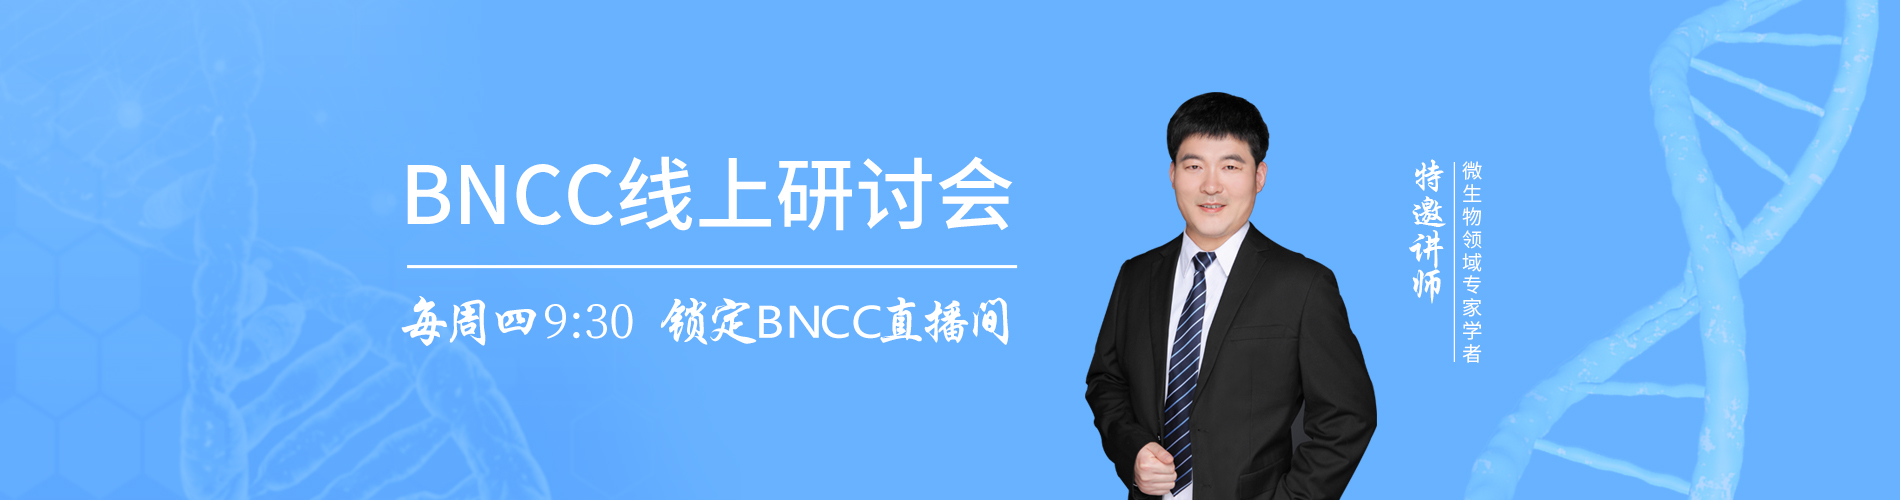 BNCC線上研討會-北納生物